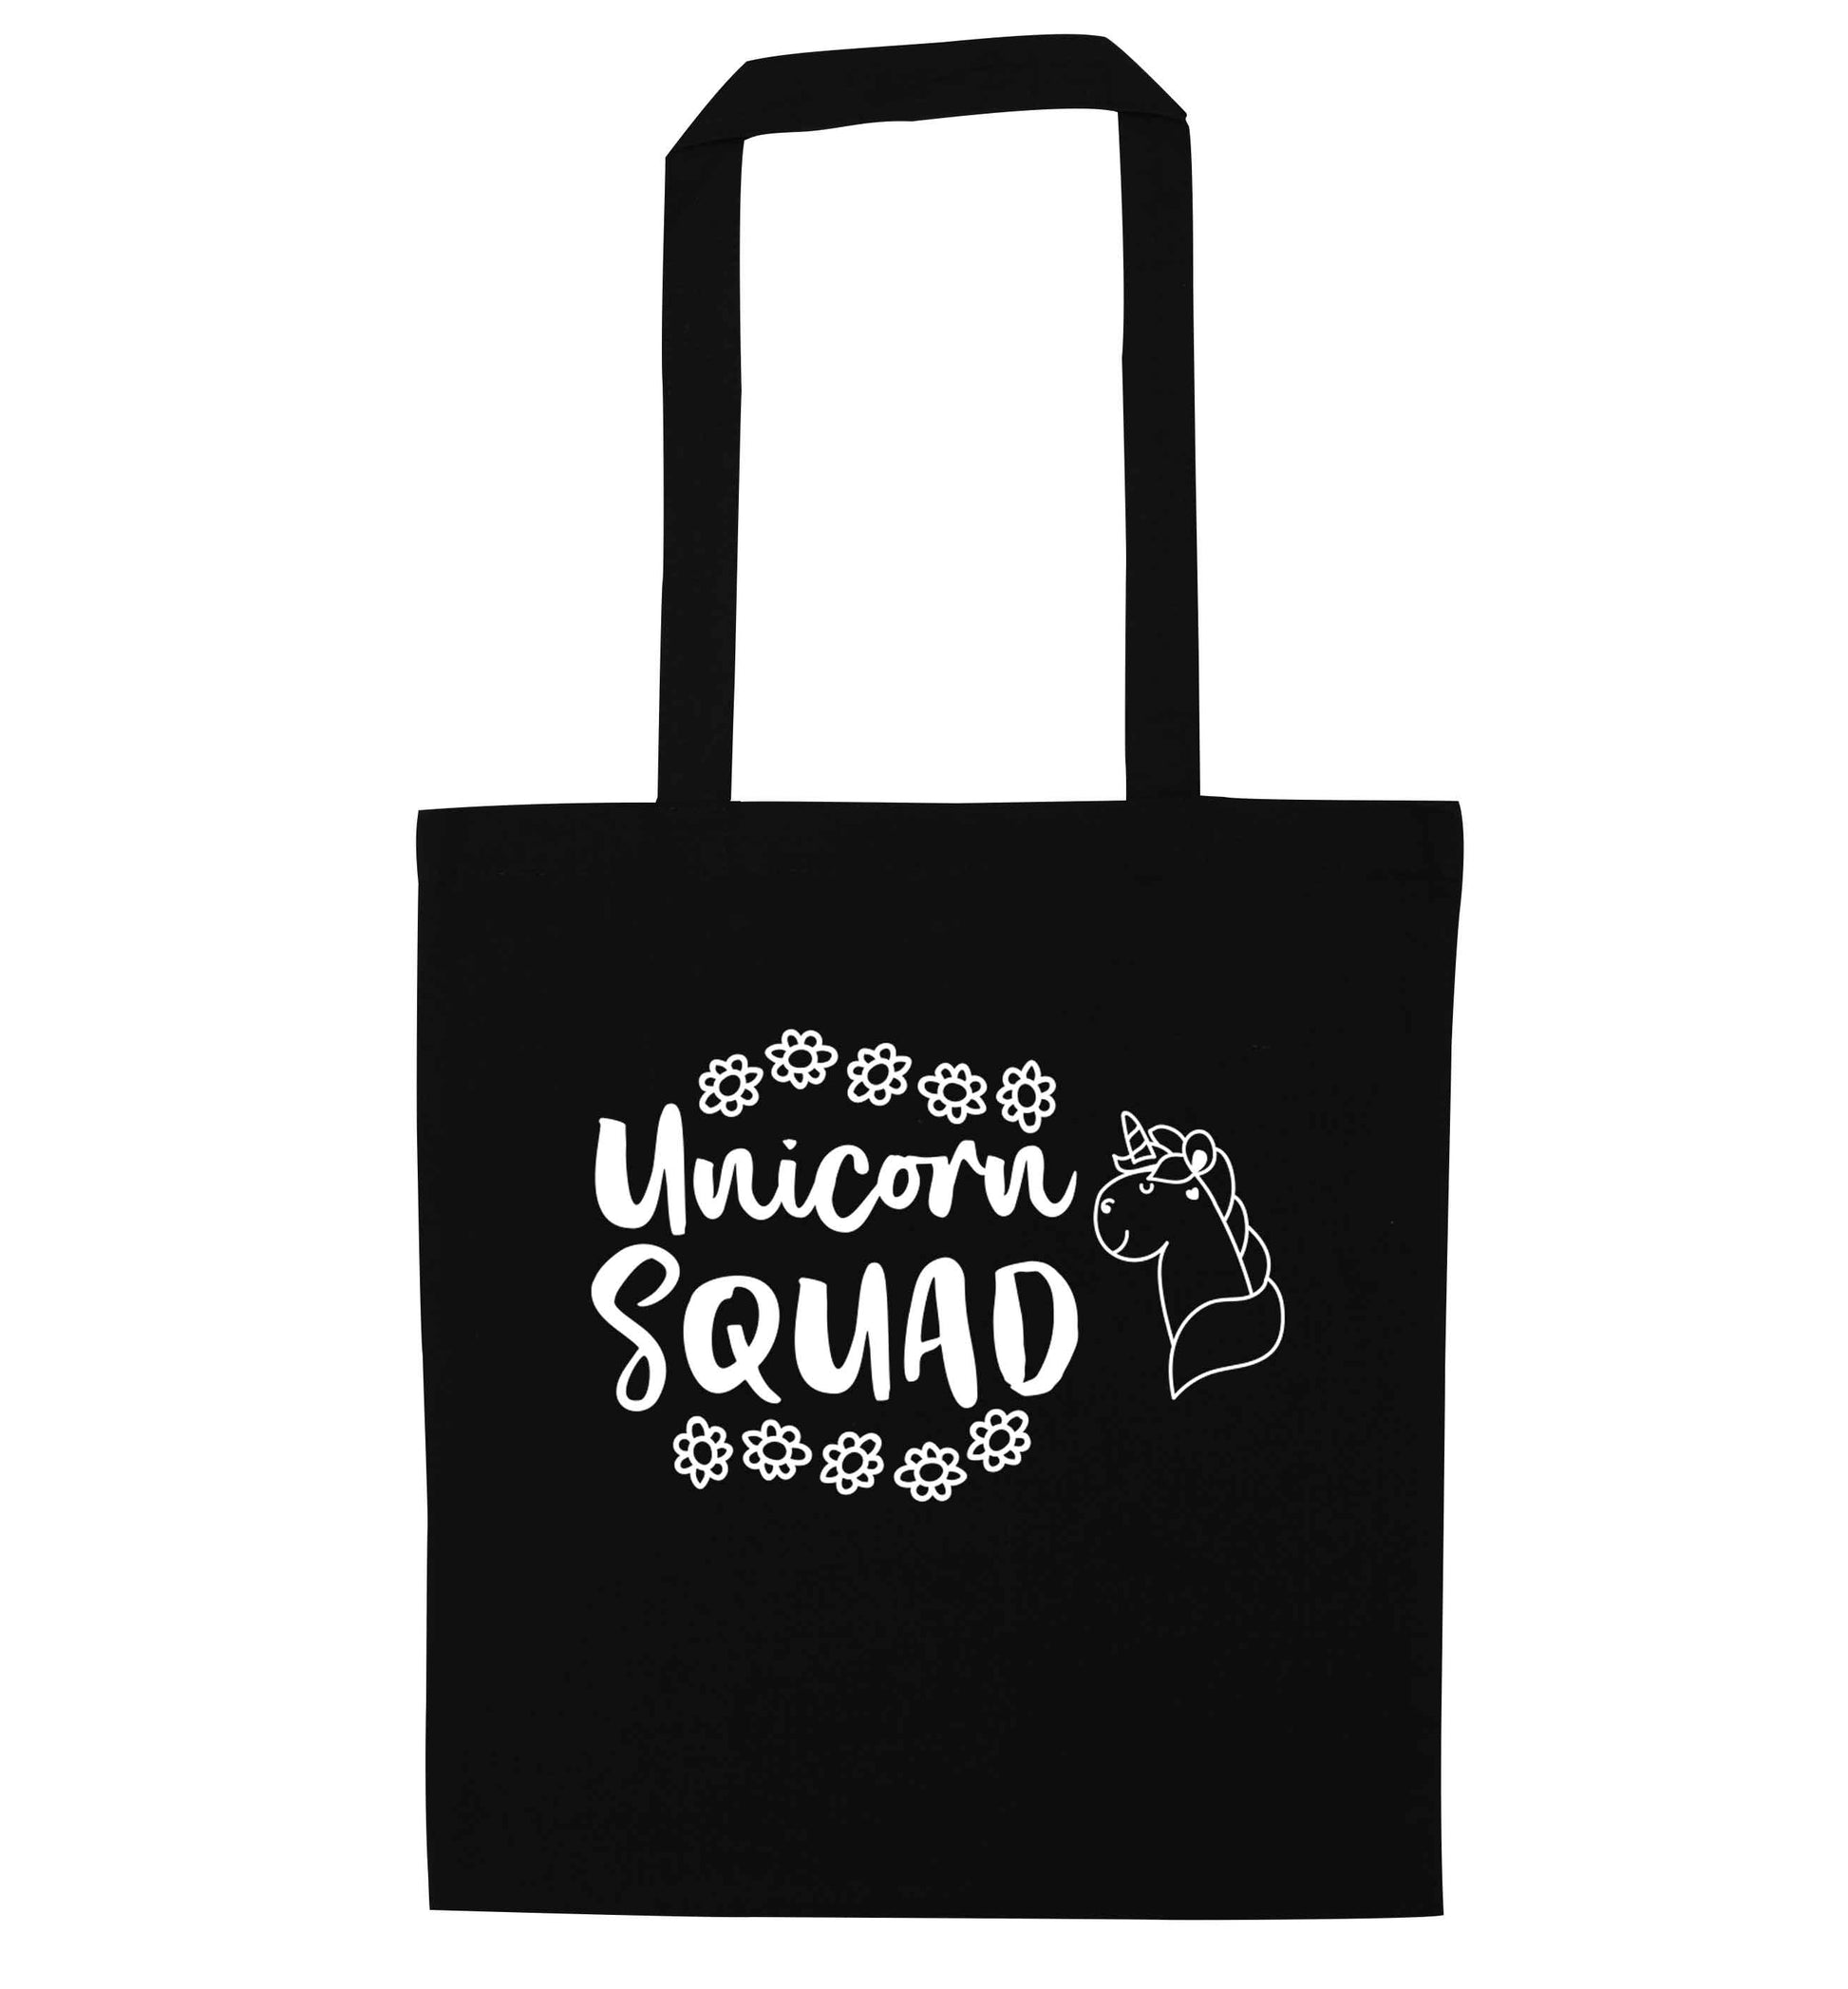 Unicorn Squad black tote bag